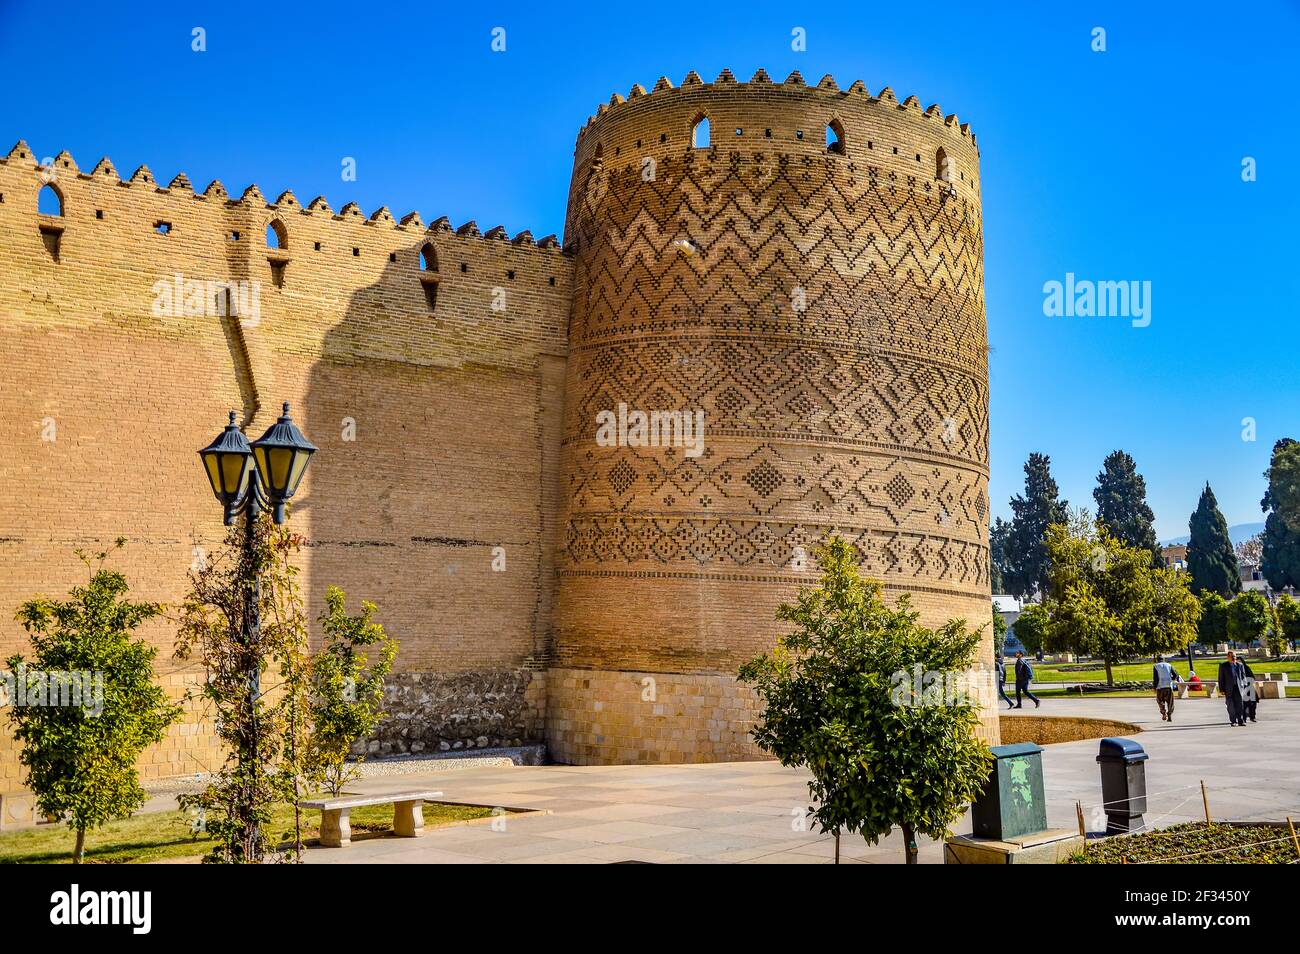 Shiraz, Iran - December 13, 2015: Leaning tower of the Arg of Karim Khan, a famous landmark in Shiraz, Iran Stock Photo